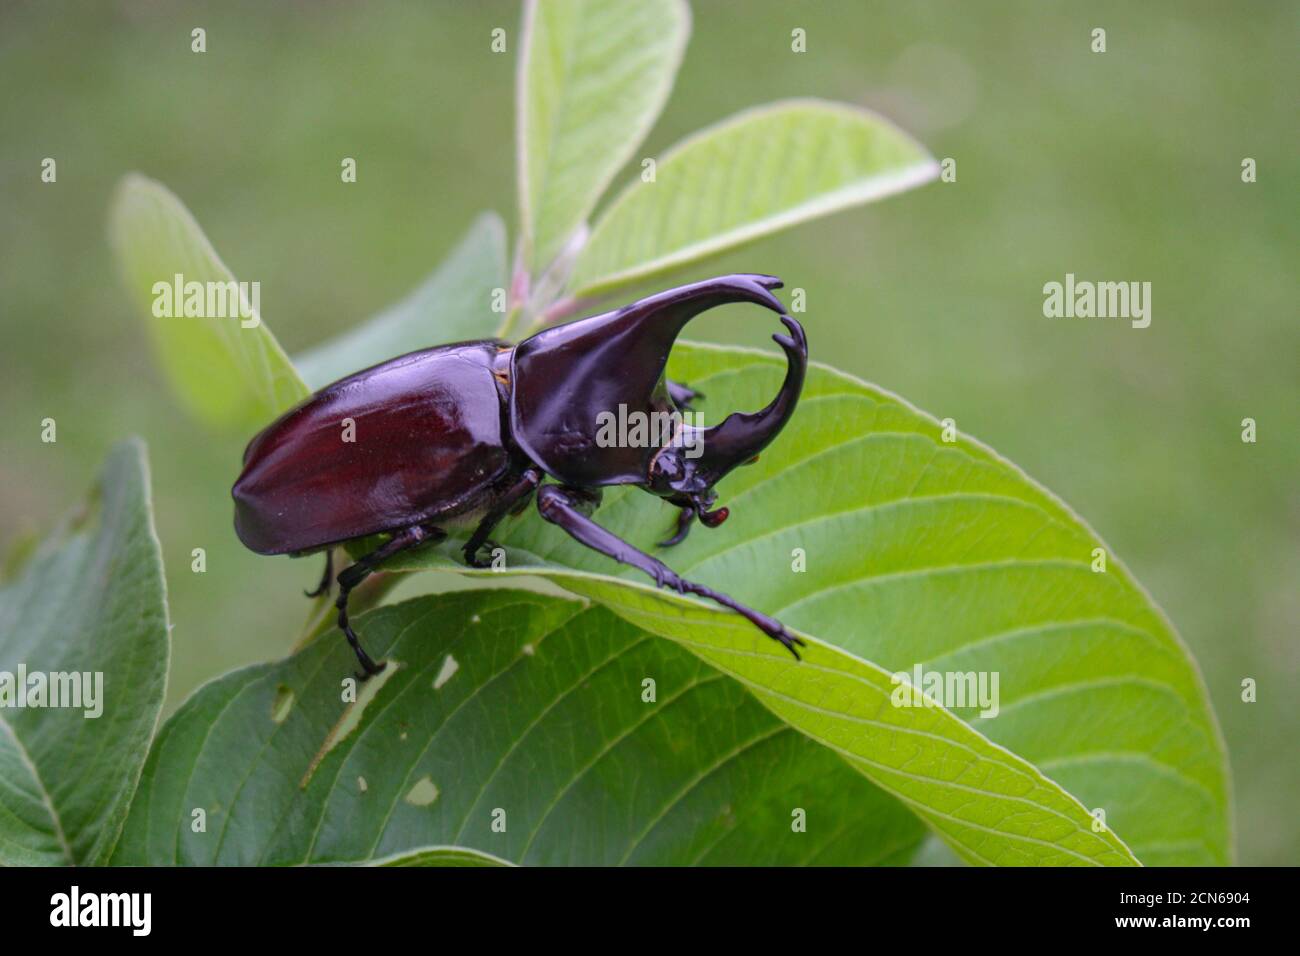 Horn beetlel, Rhino beetlel,Horn beetlel on the leaf in nature Stock Photo